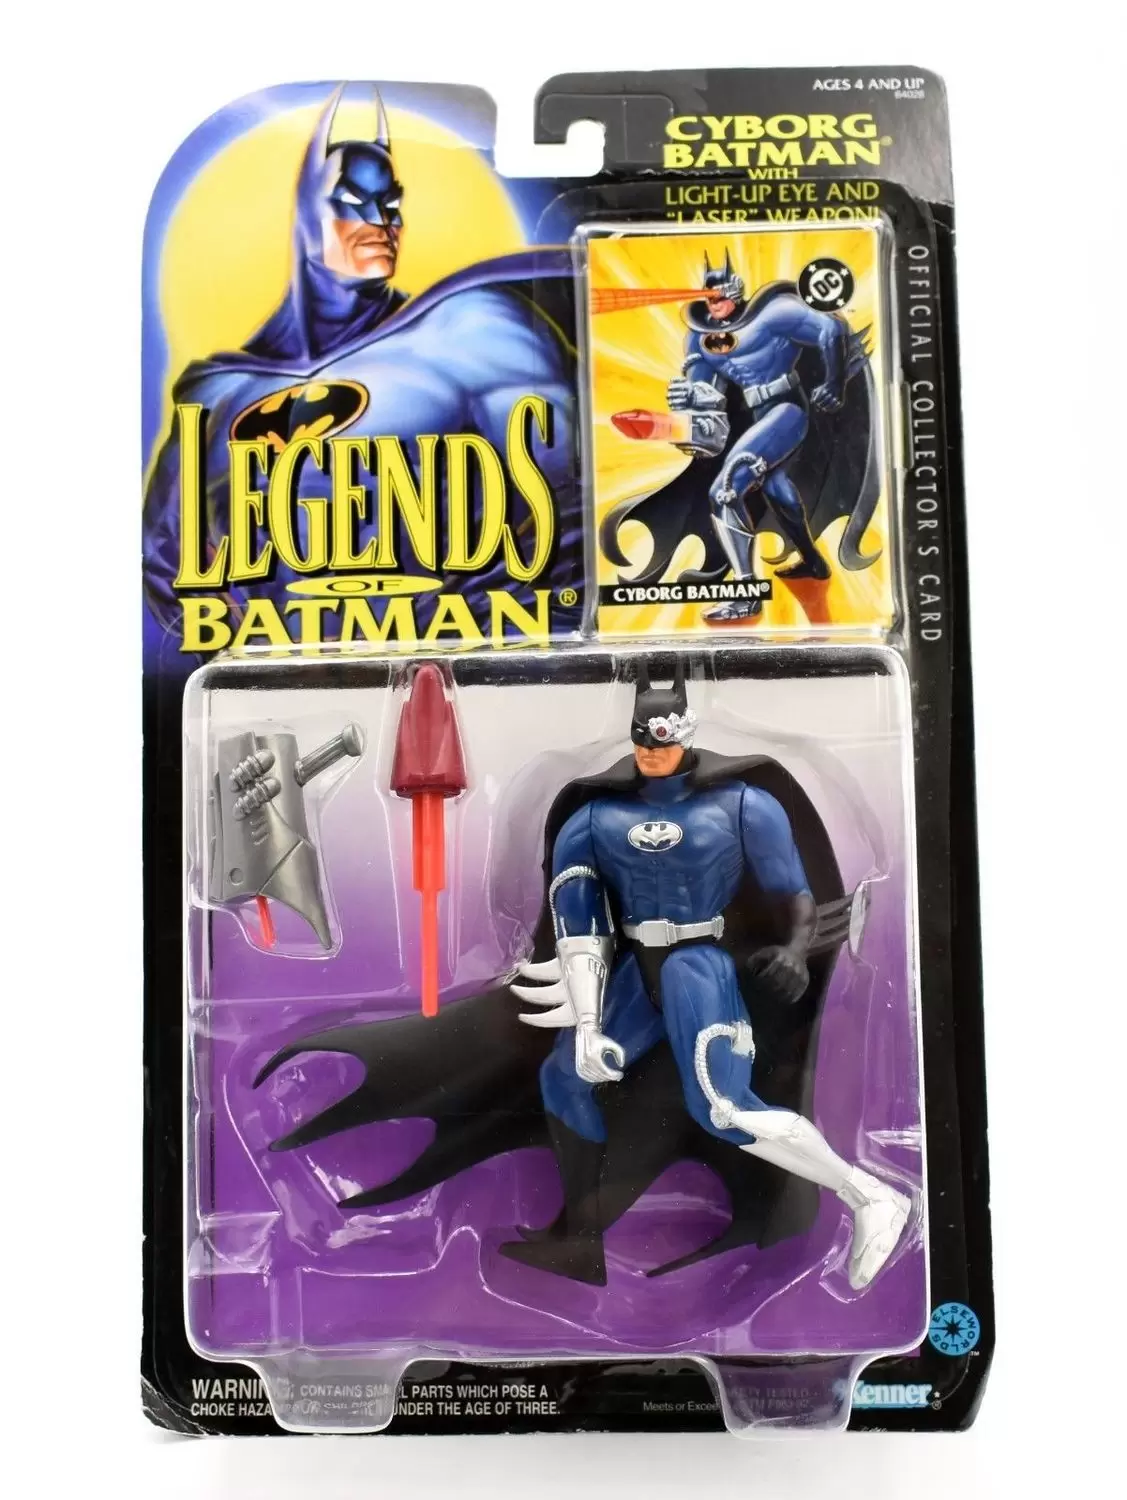 Legends of Batman - Cyborg Batman